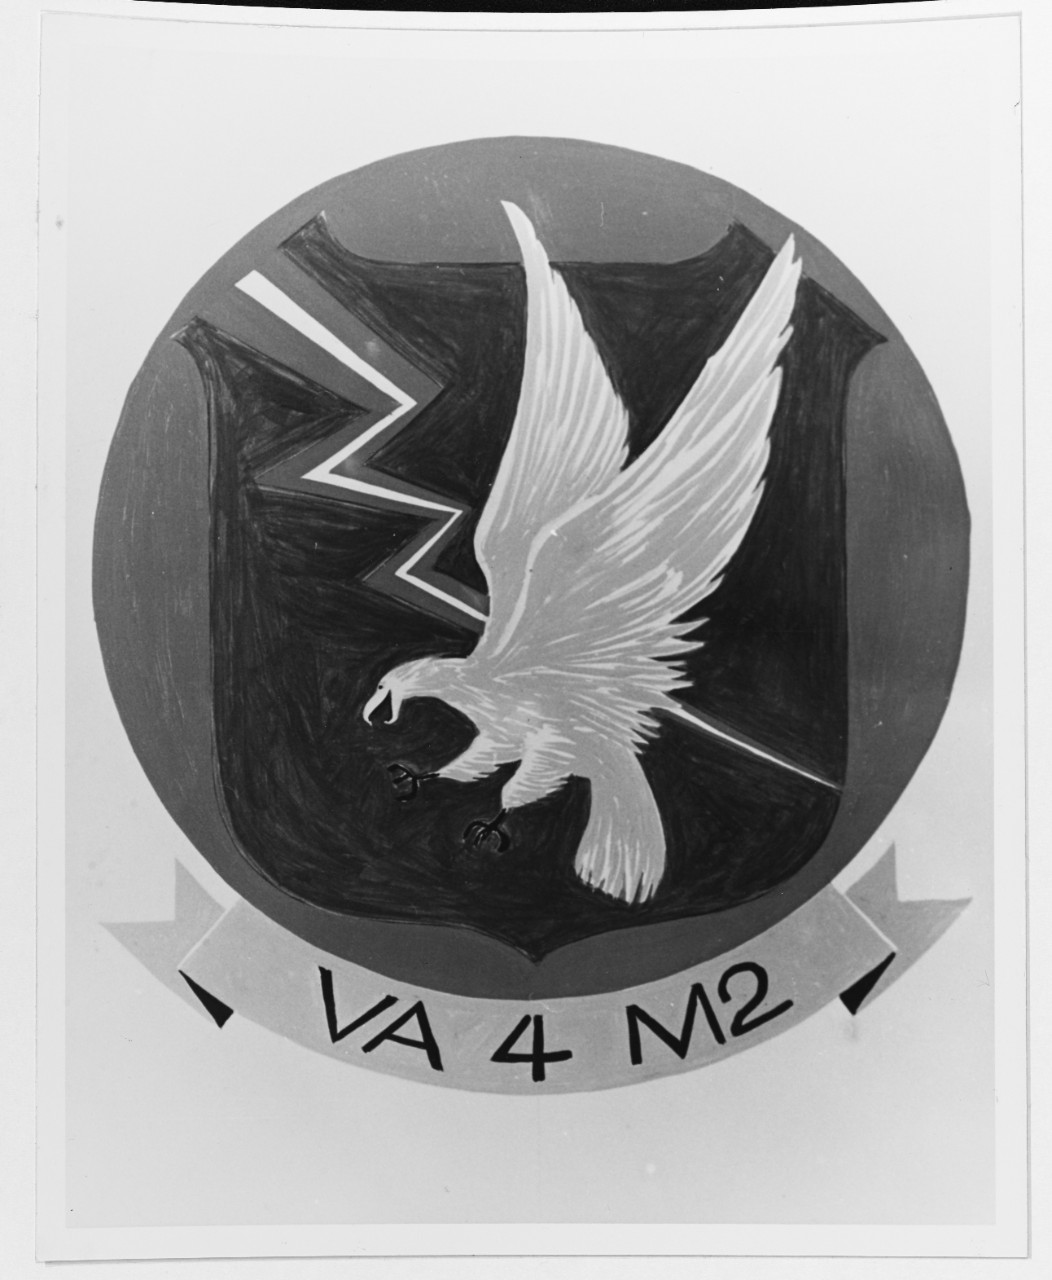 Insignia:  Reserve Attack Squadron Four M-2 (VA-4 M-2)